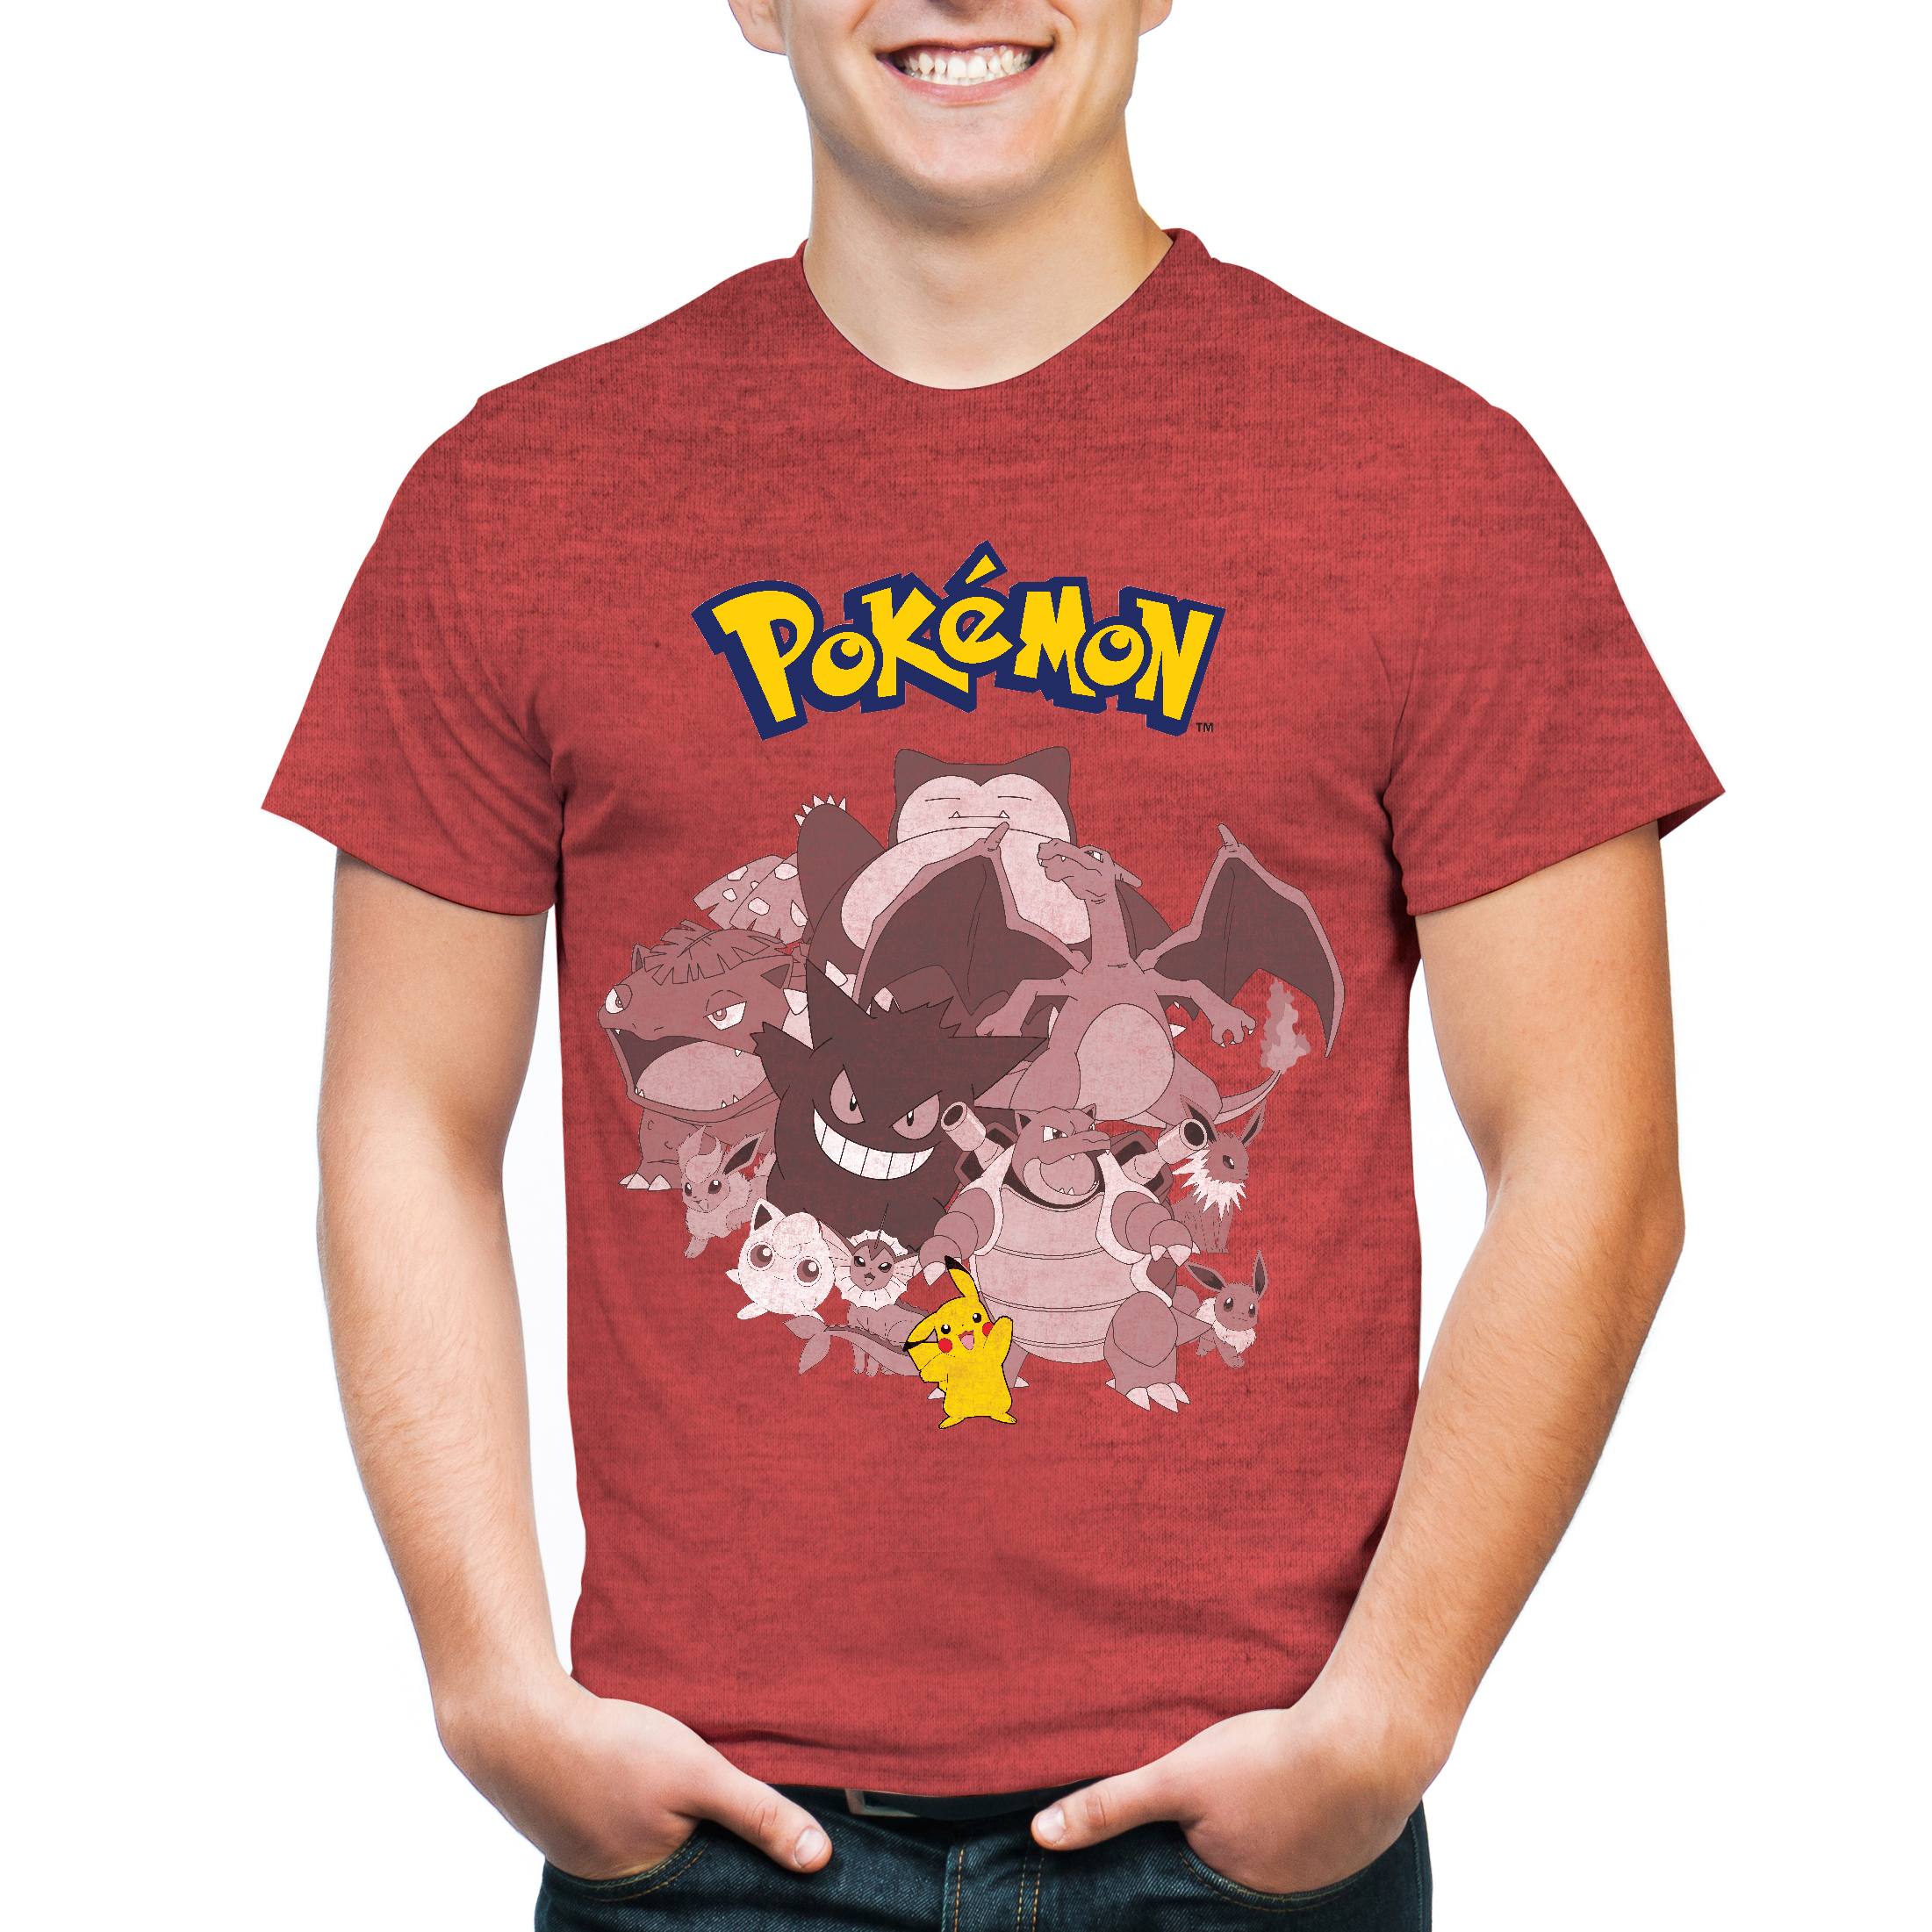 Freeze Pokemon Group Shot with Pikachu Men's Short Sleeve Graphic Tee T-Shirt